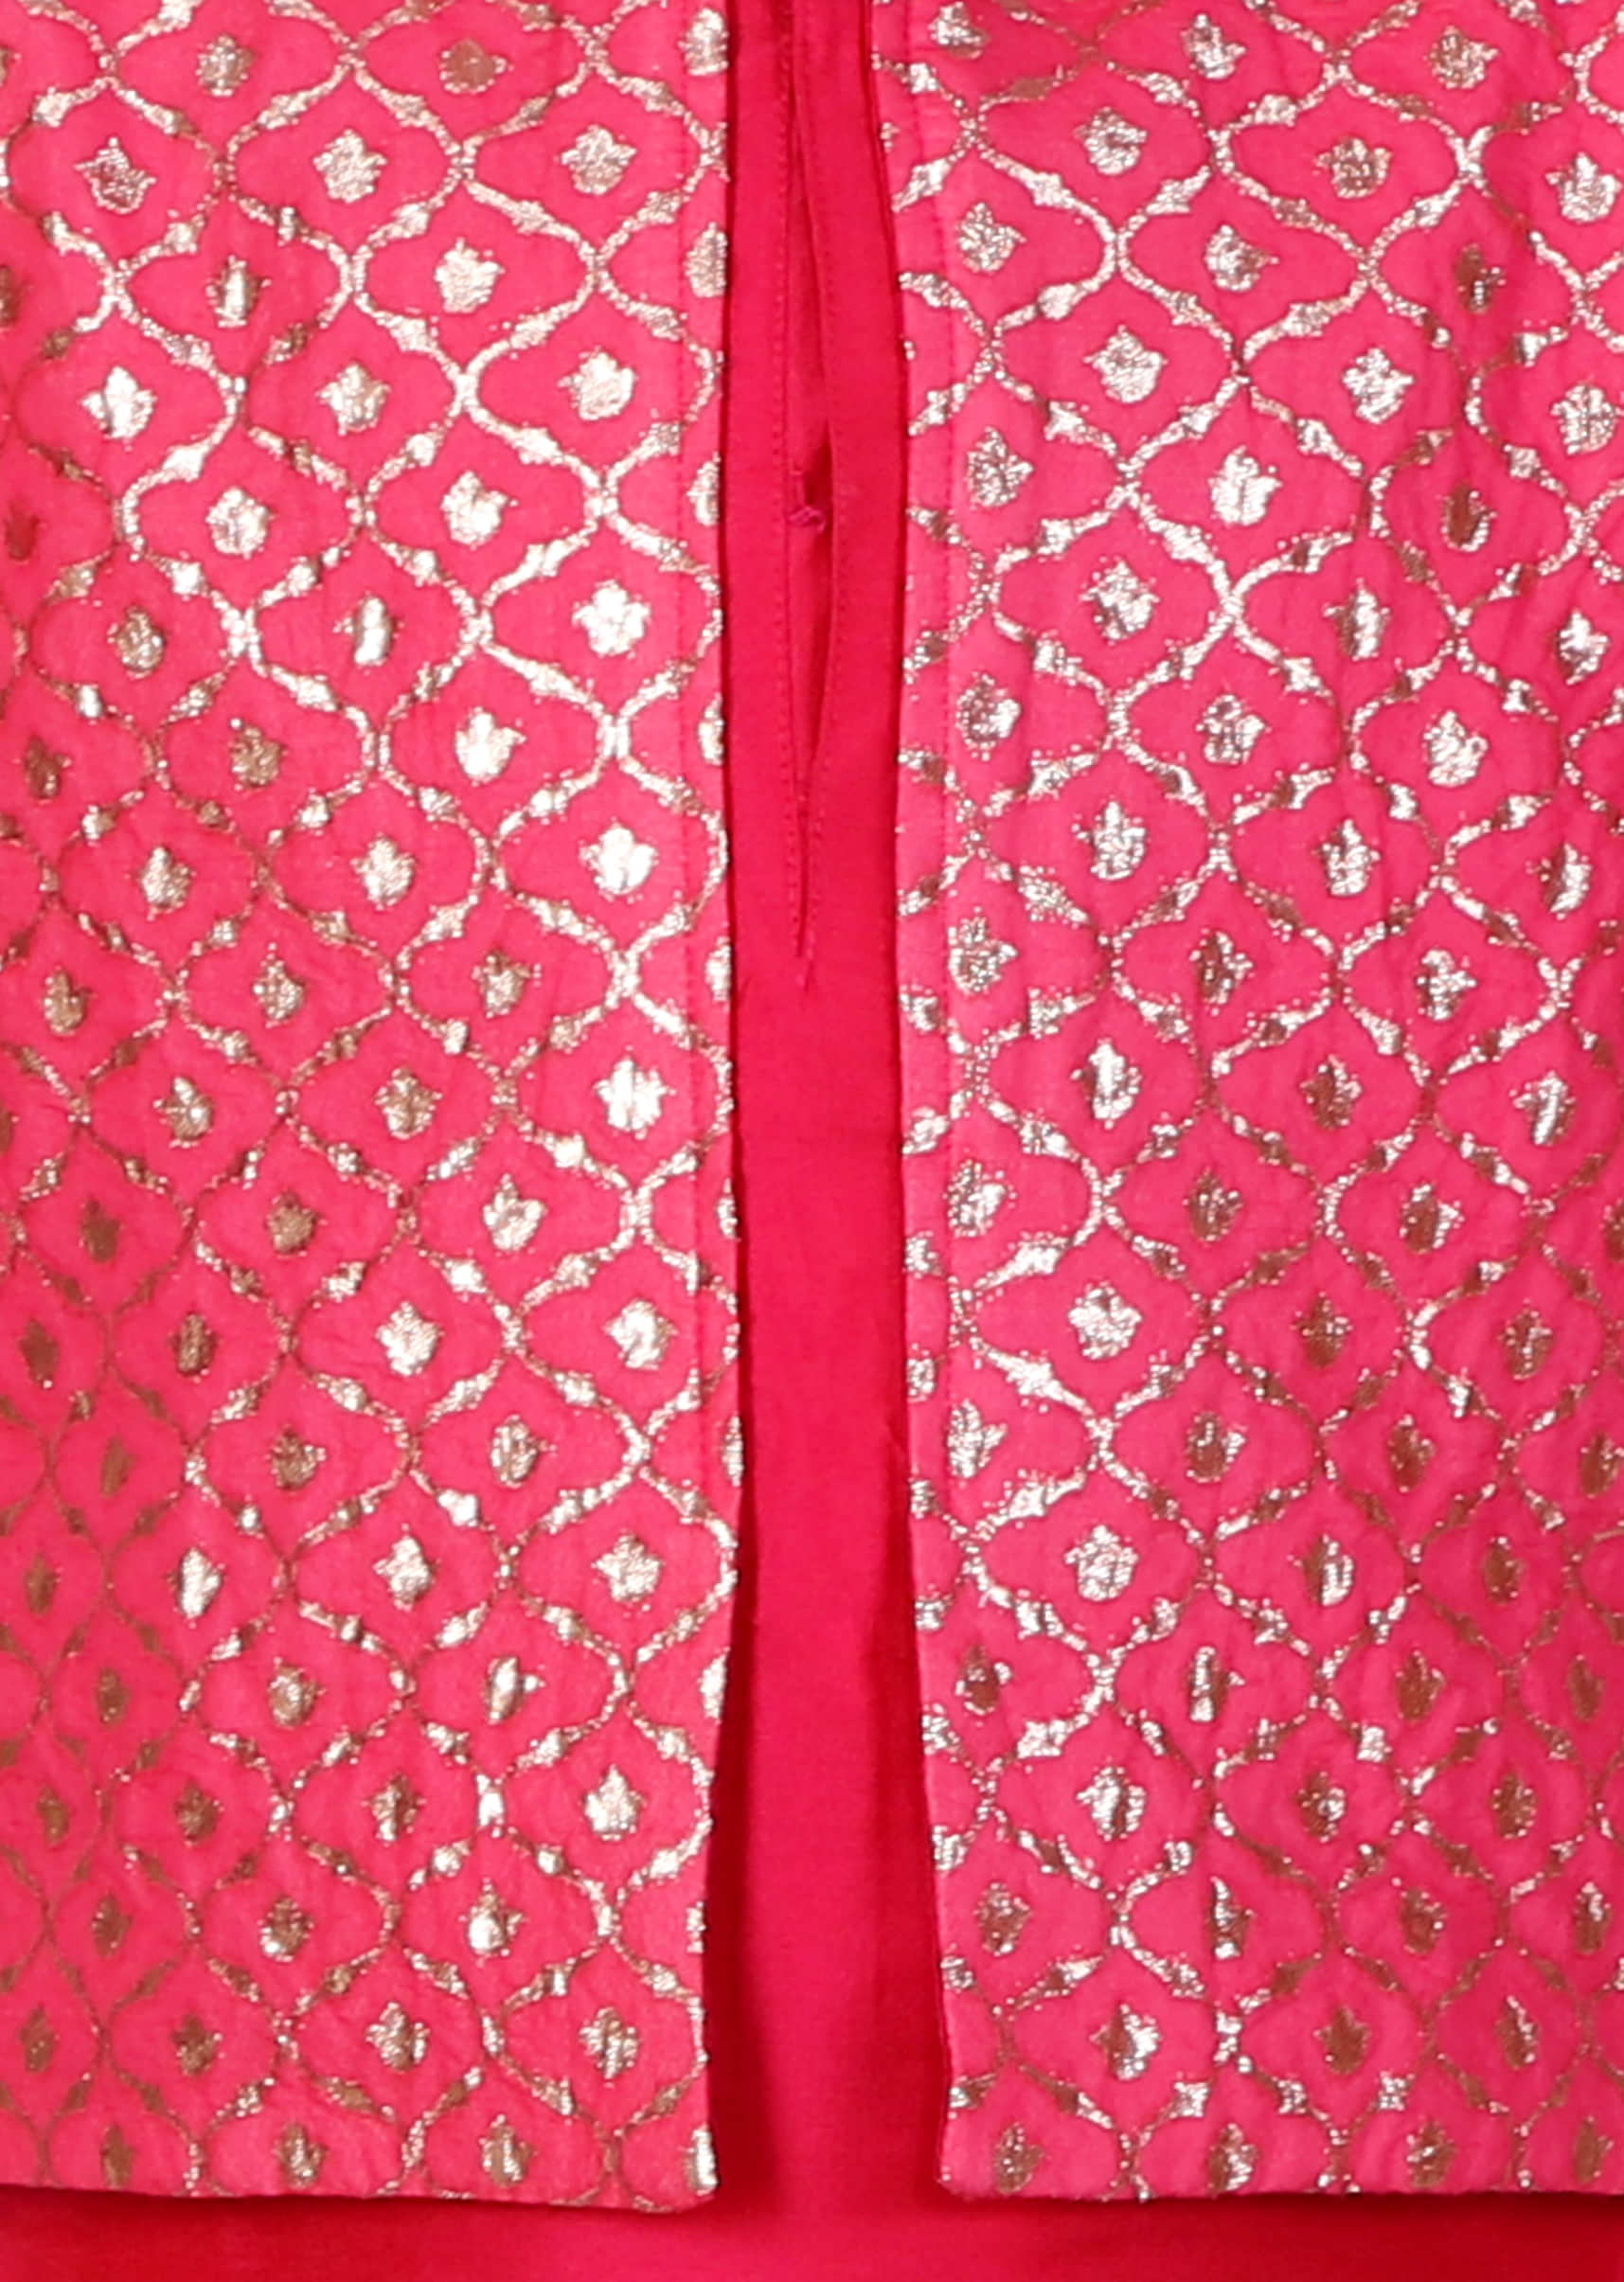 Kalki Boys Fuchsia Pink Kurta Set With Attached Jacket Featuring Zari Weave 